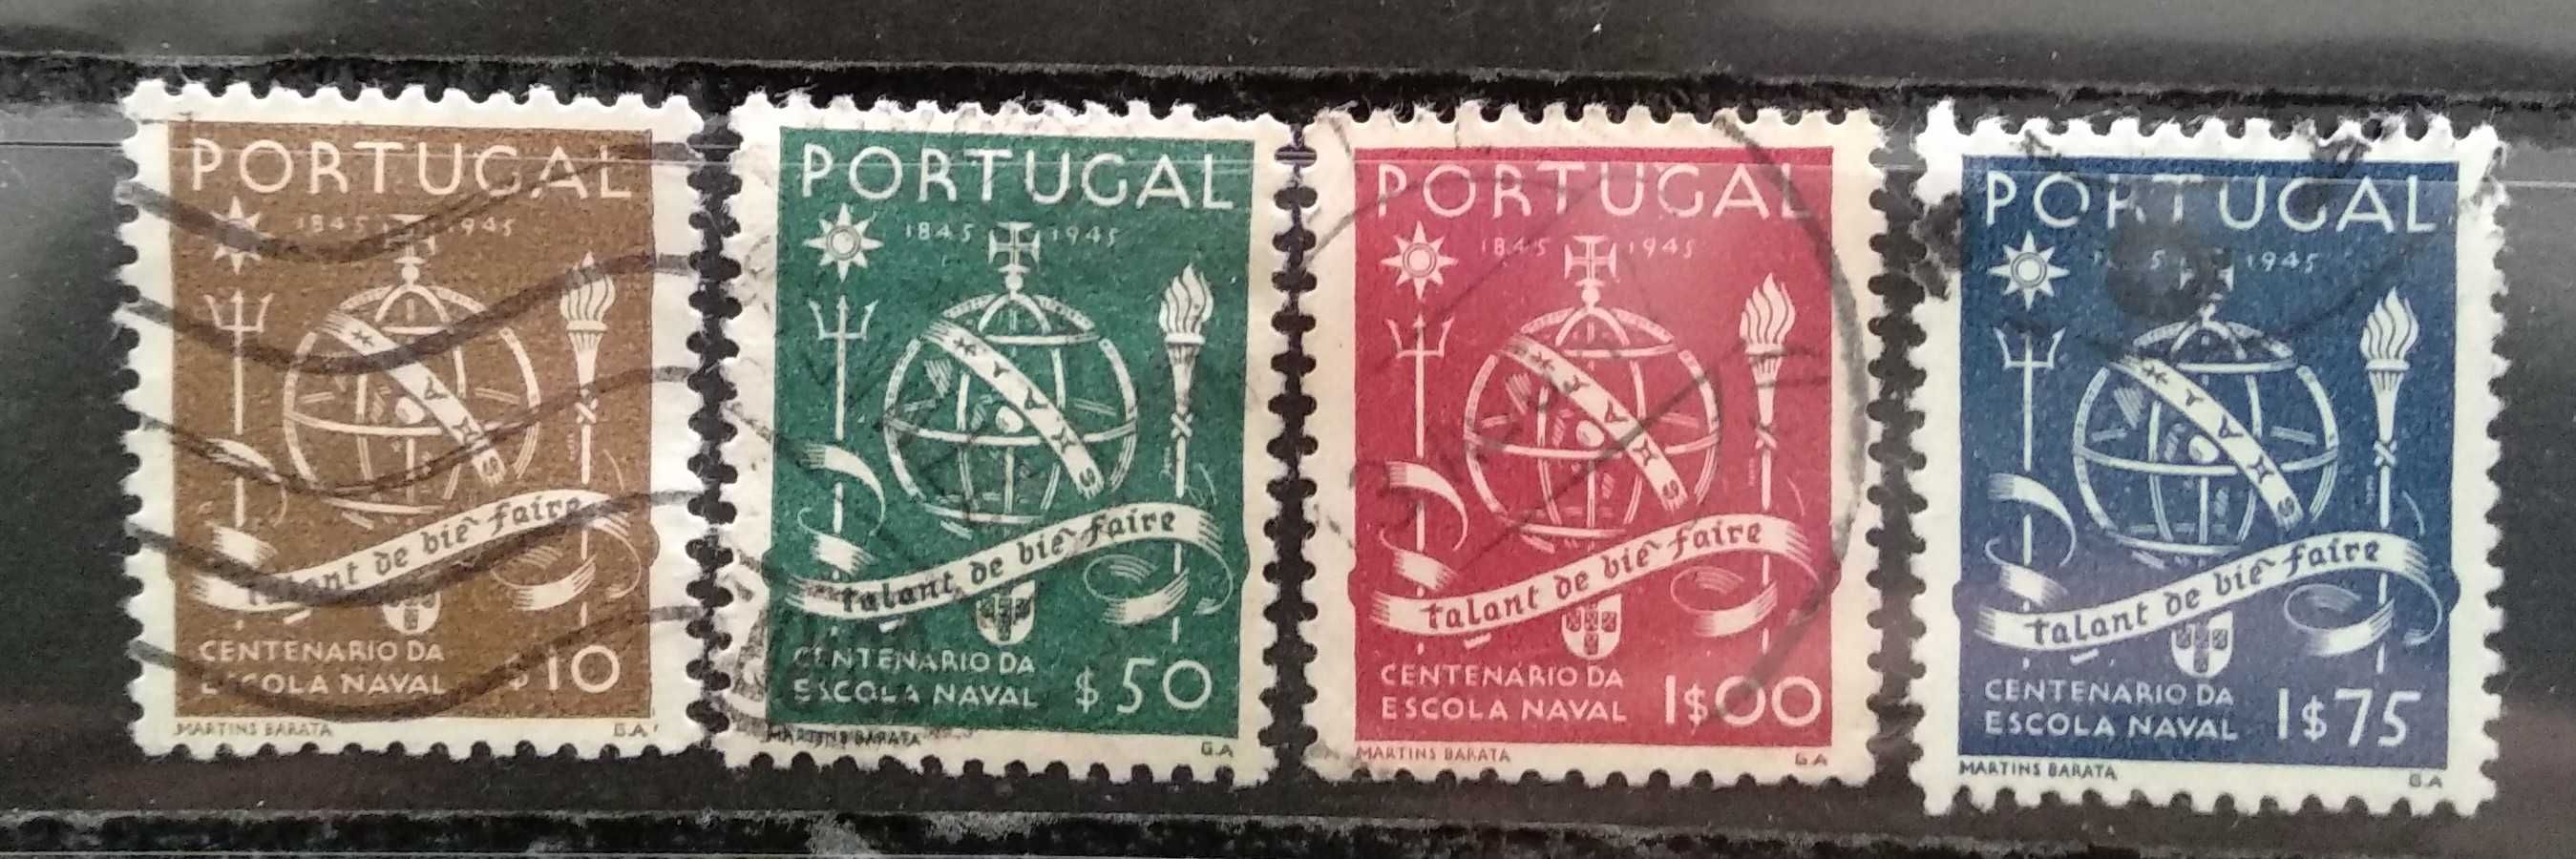 Selos Portugal - Séries completas